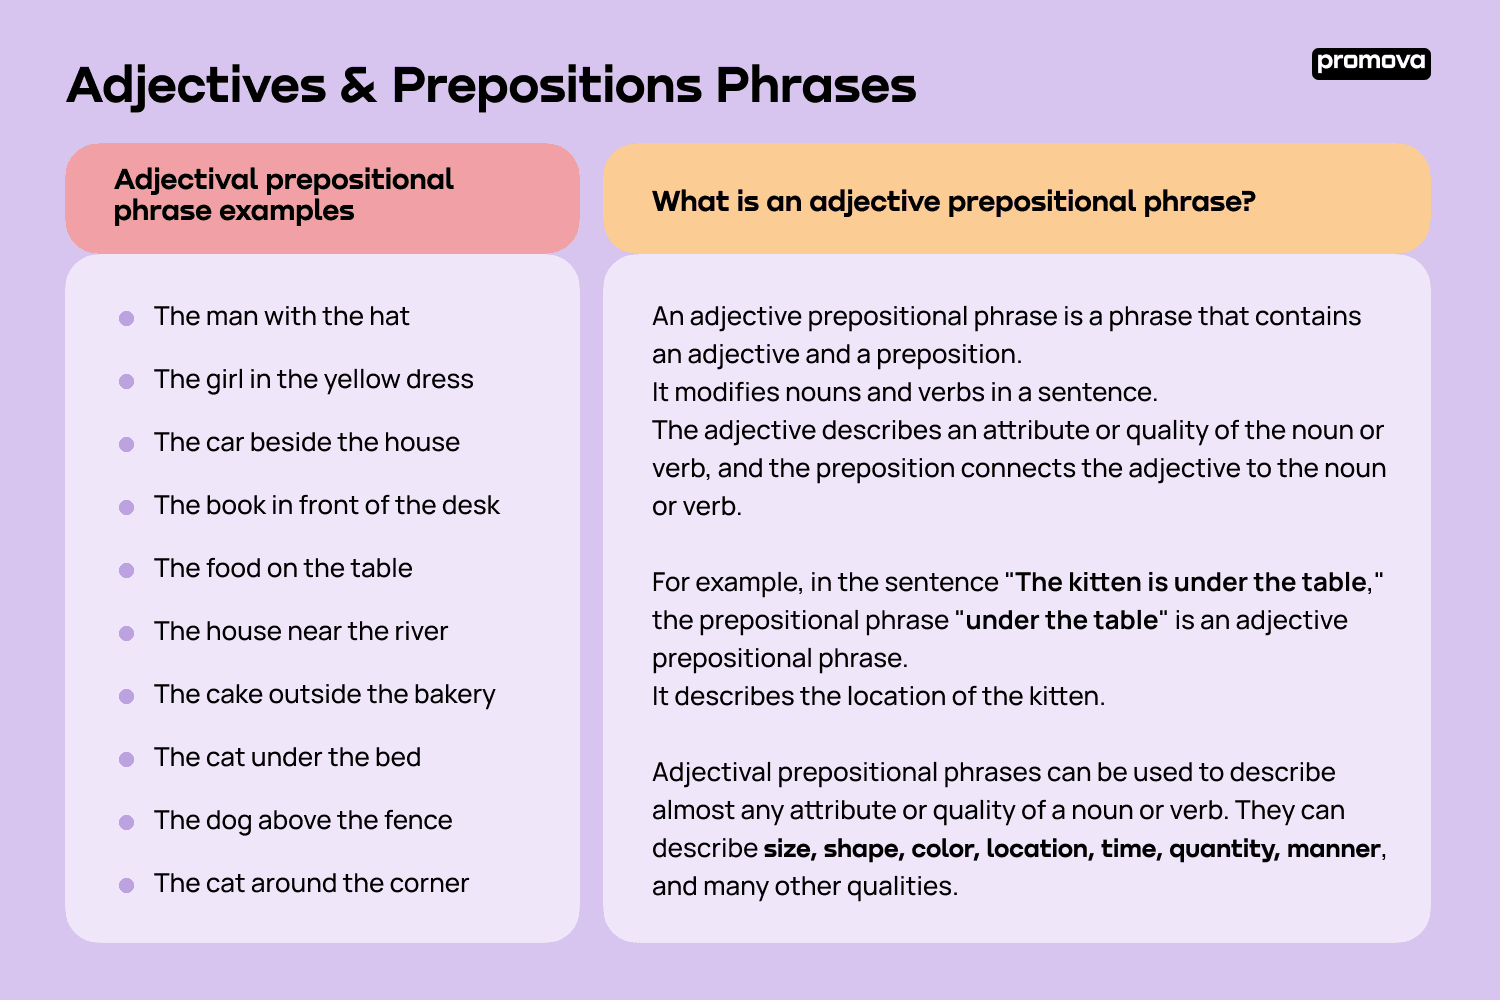 Adjectival prepositional phrase examples